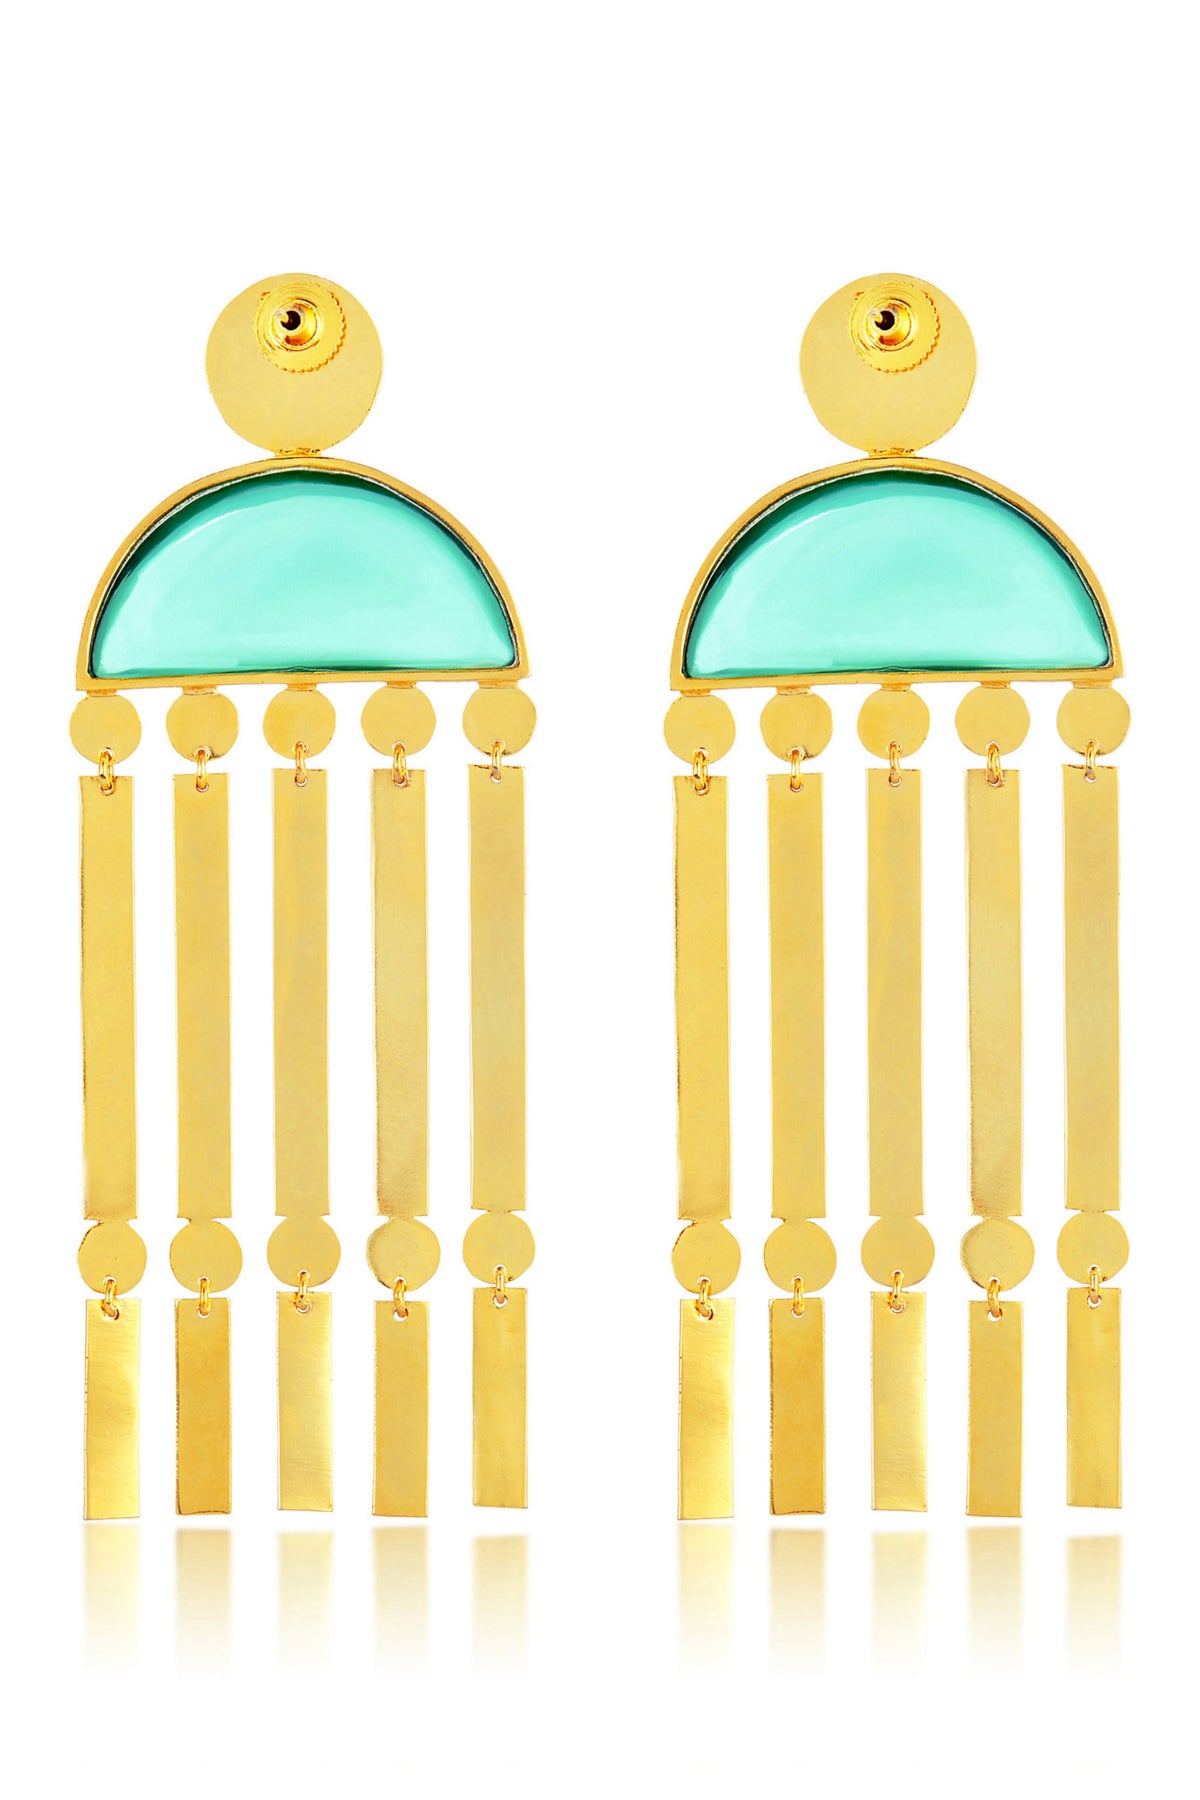 Ula jellyfish earrings